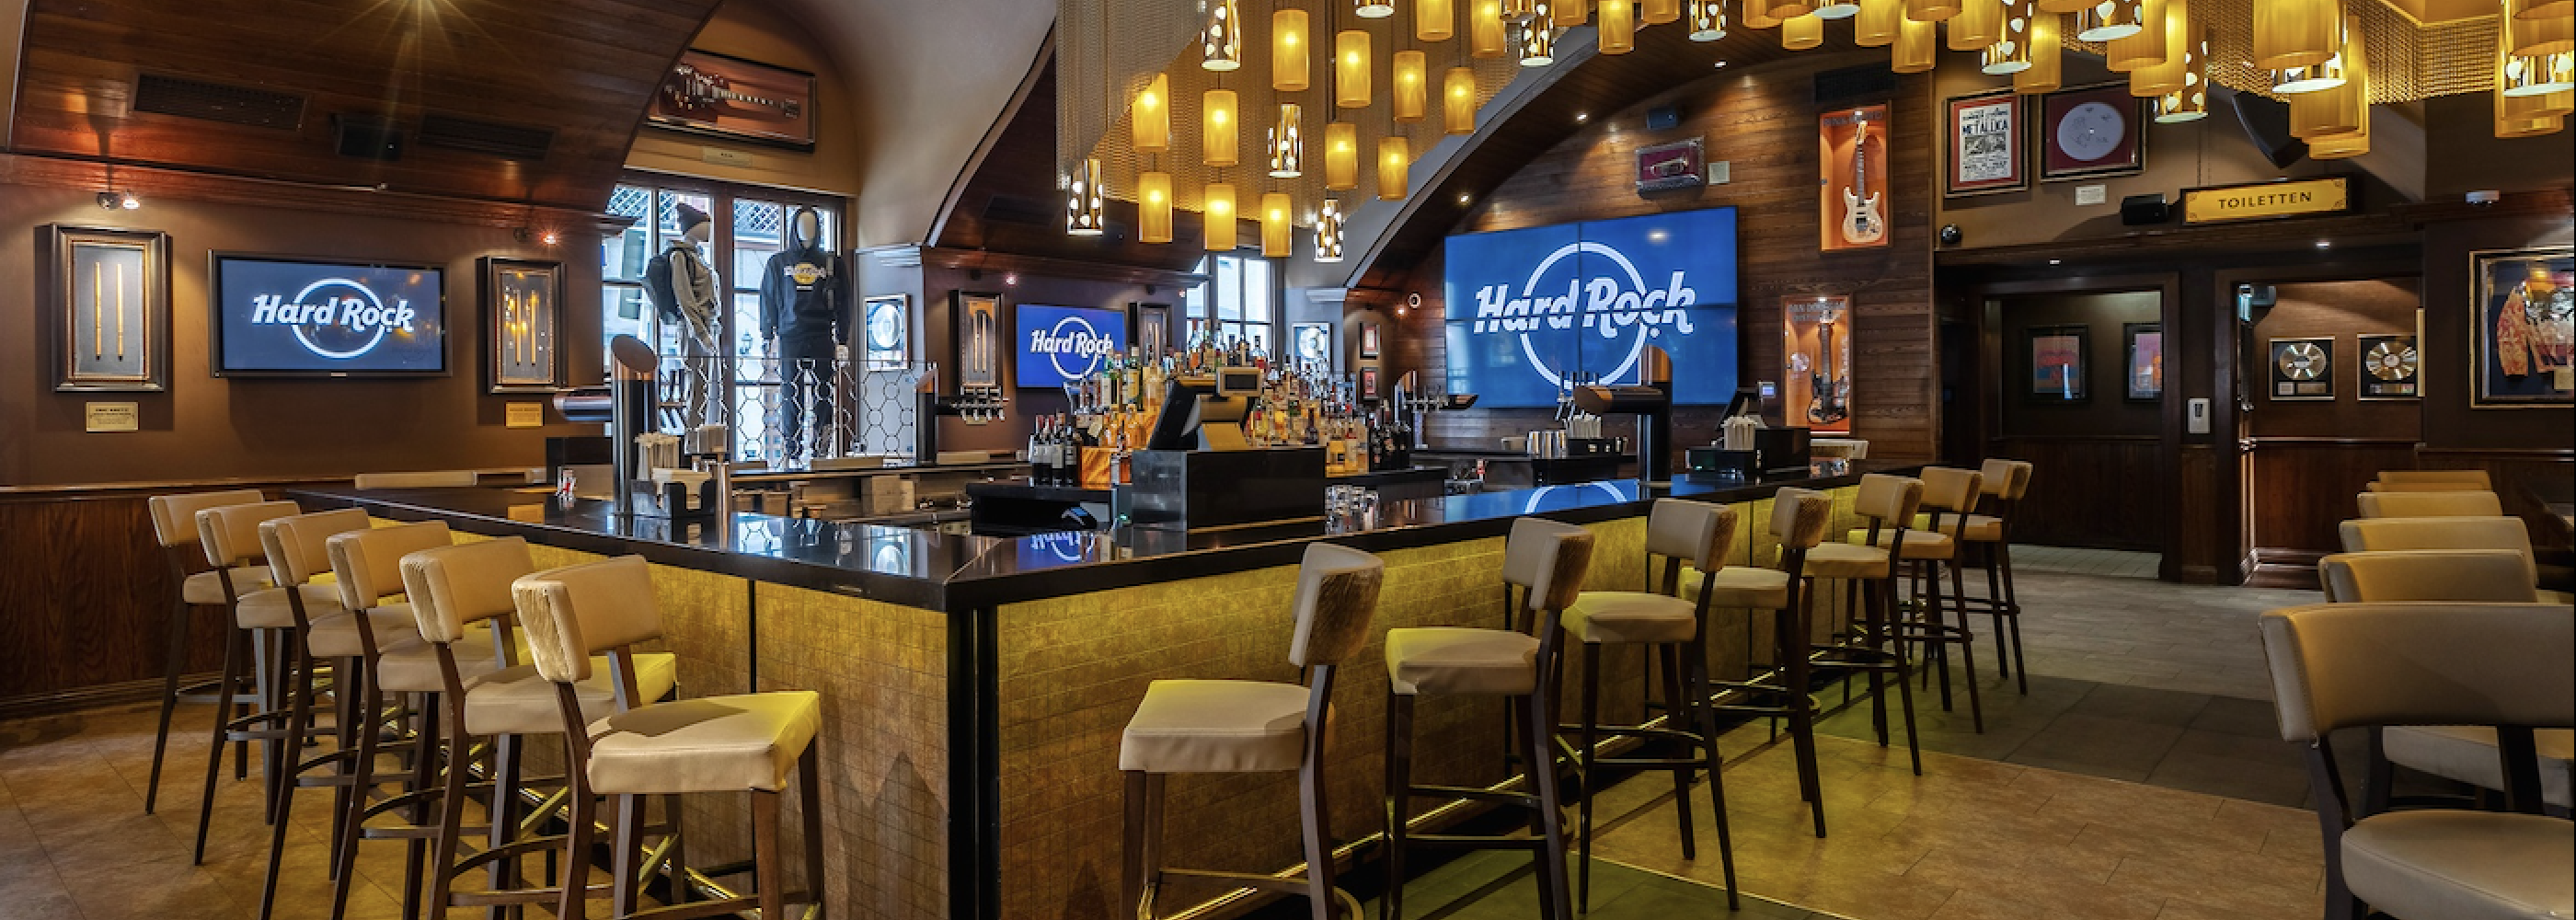 Hard Rock Cafe 15 % Rabatt <br> im Restaurant & Rock Shop!